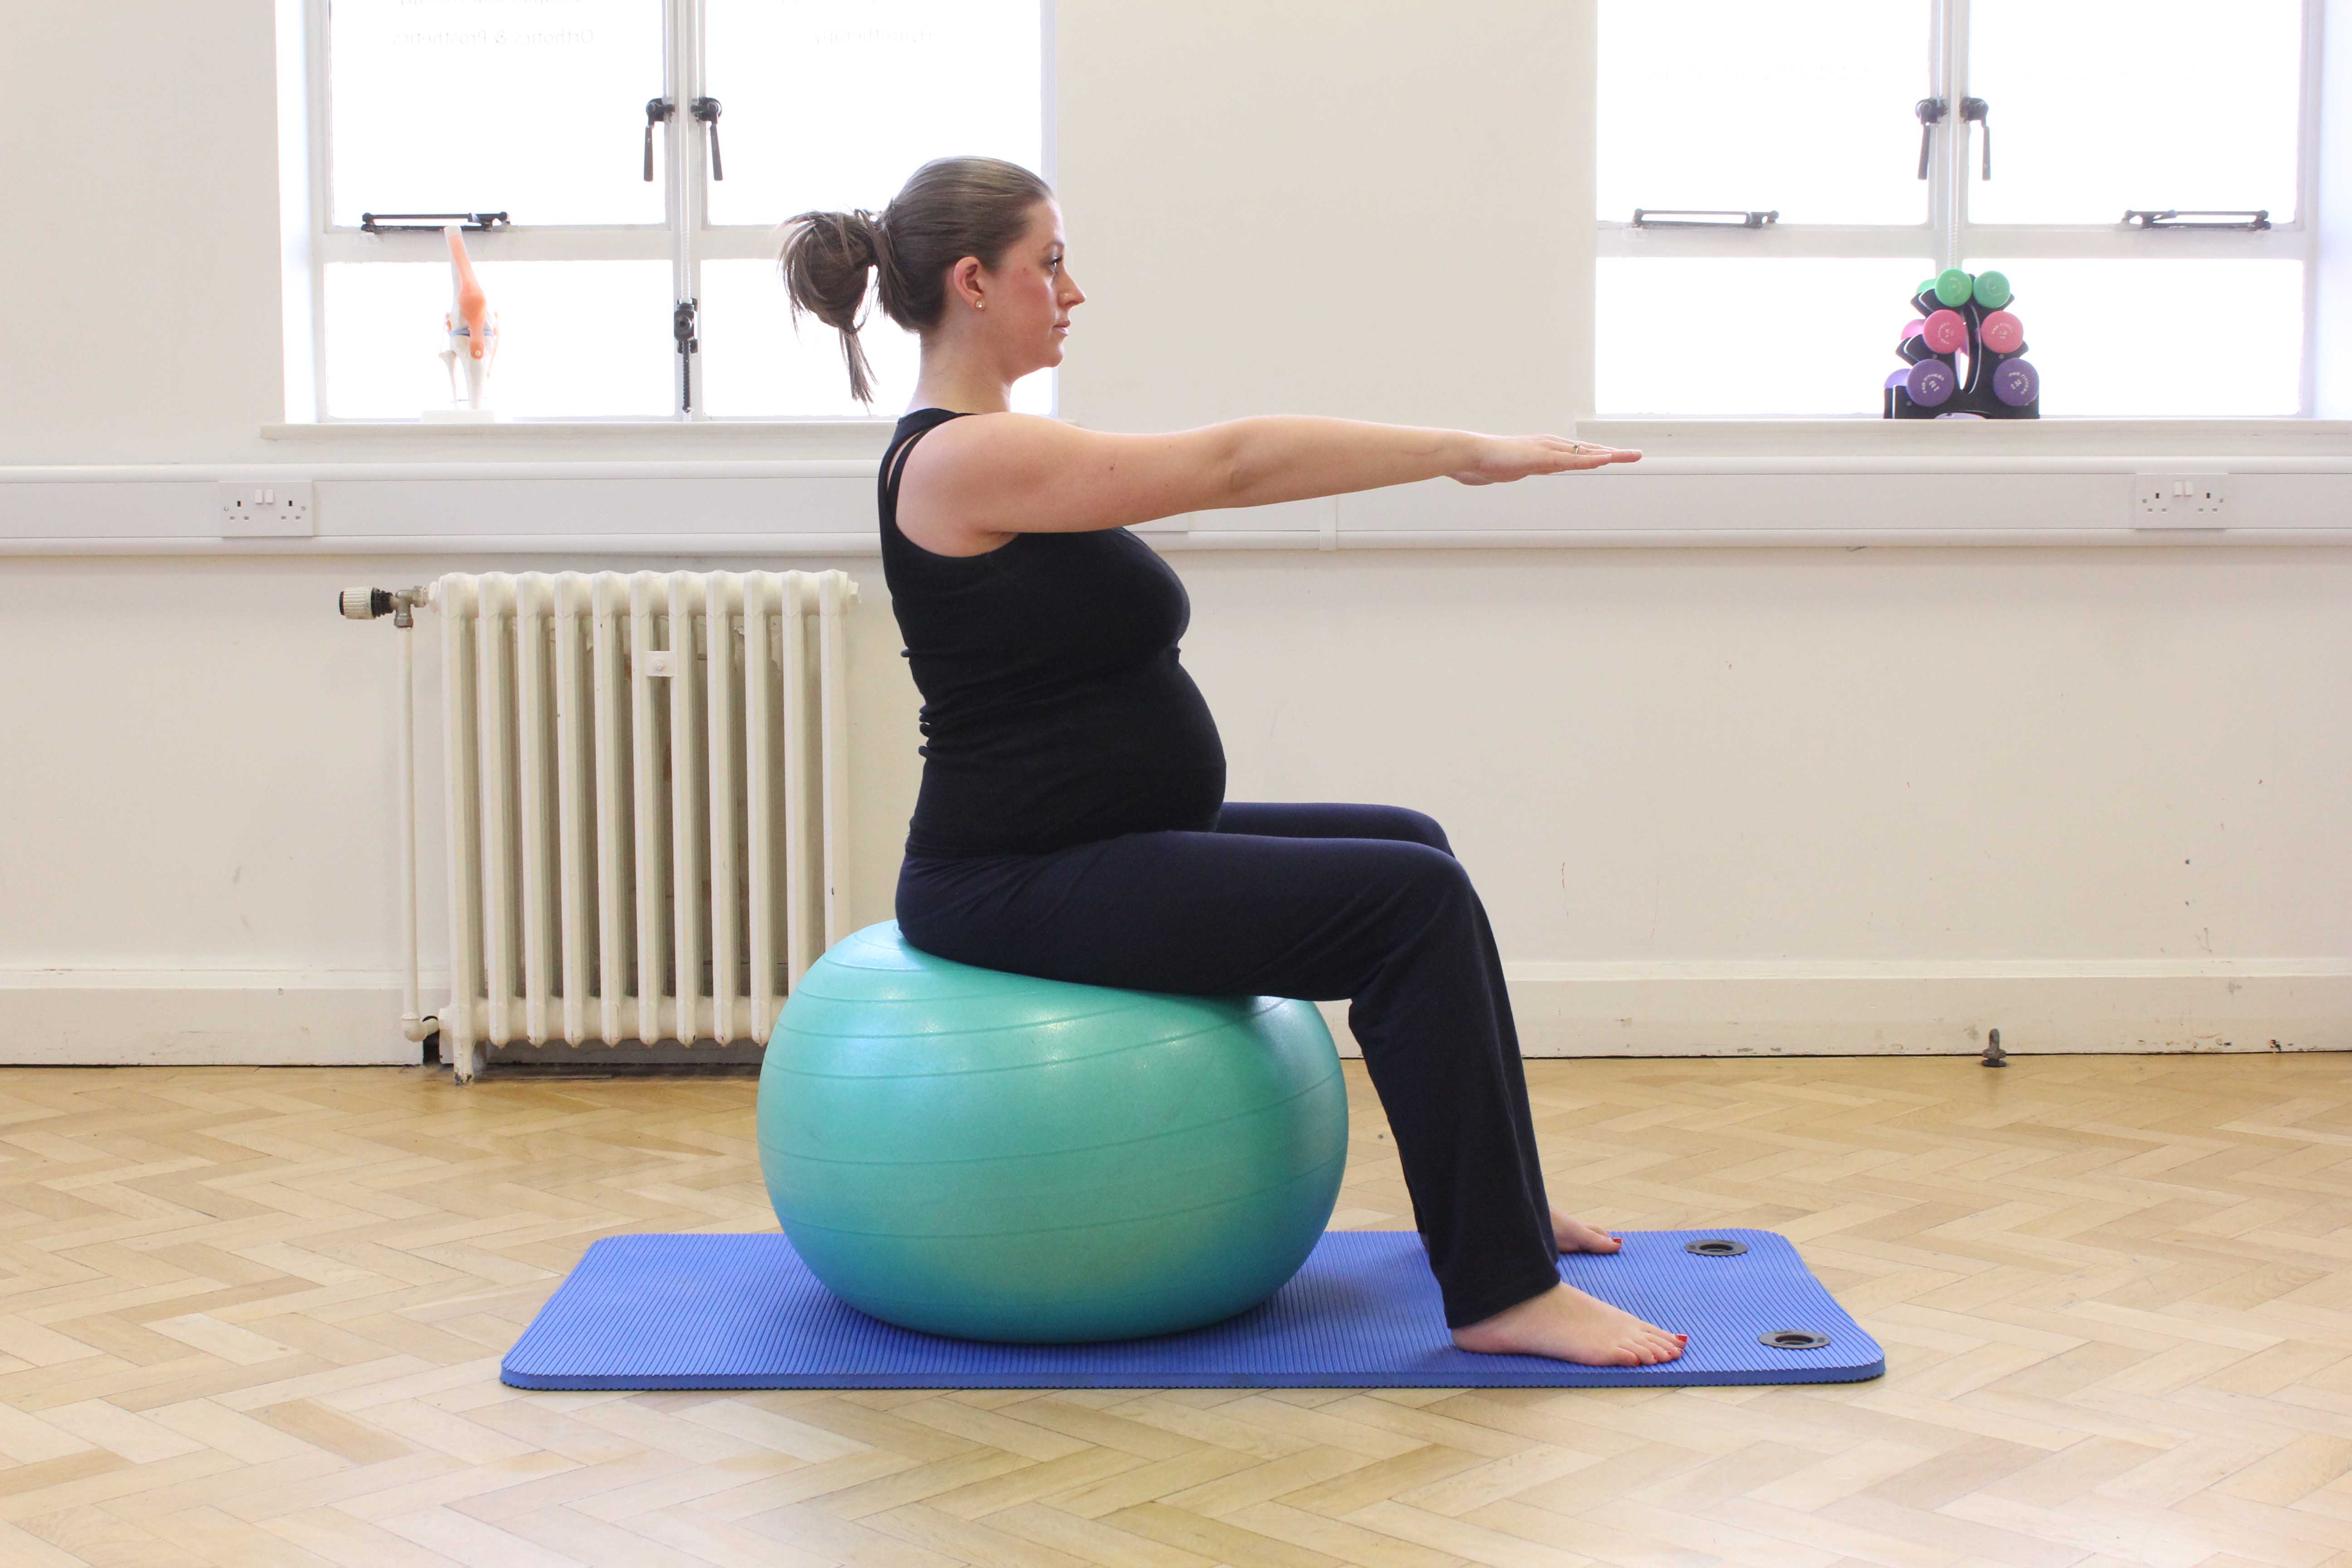 https://www.physio.co.uk/images/lower-back-pain-during-pregnancy/lower-back-pain-during-pregnancy1.jpg